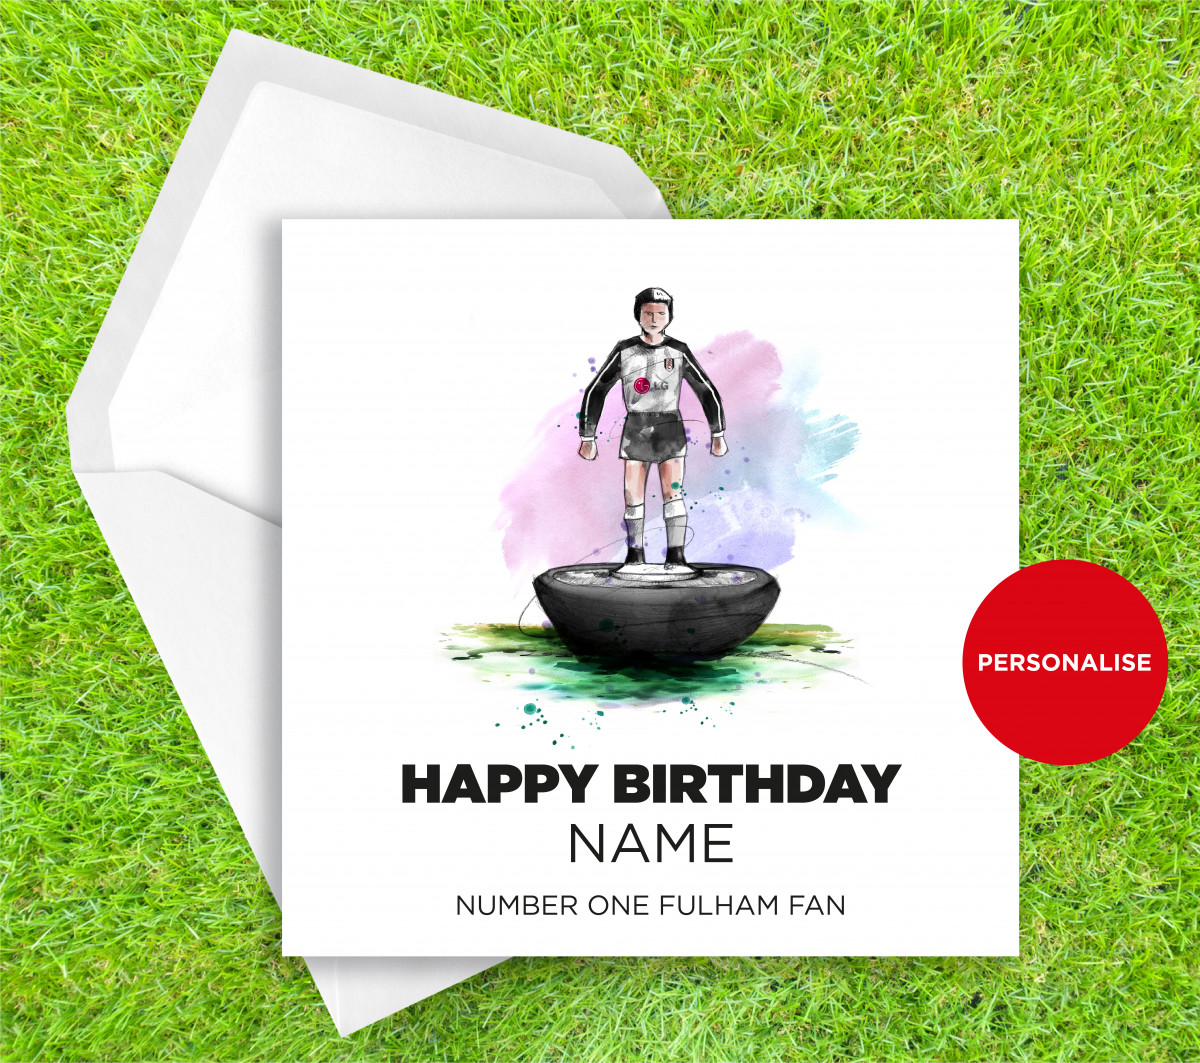 Fulham, Subbuteo, personalised birthday card